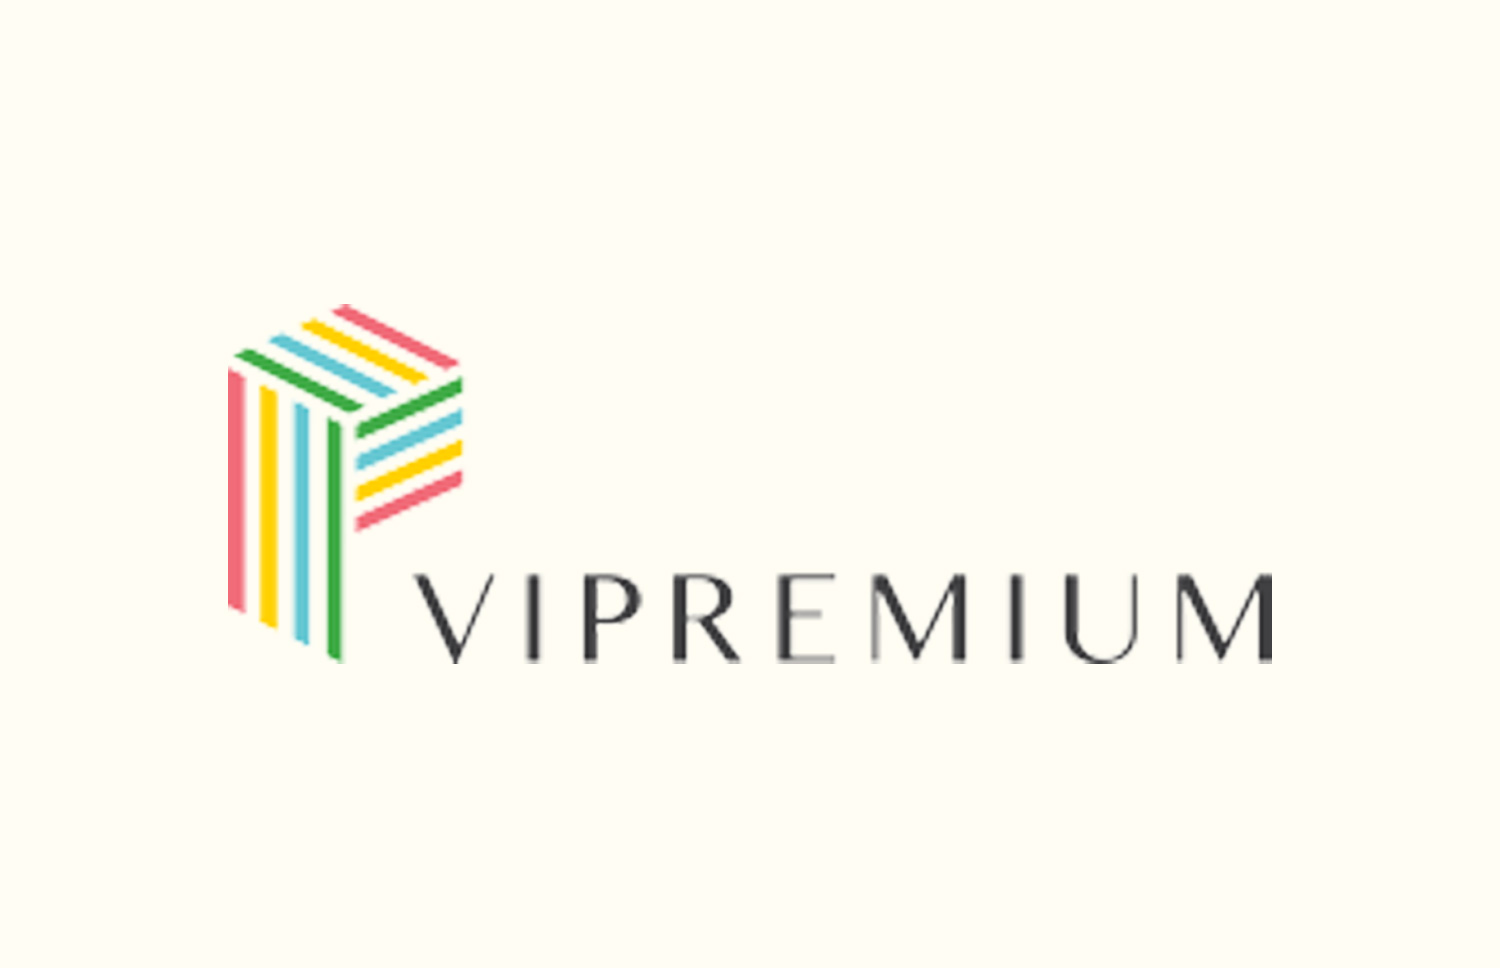 See us in Vietnam VIPremium Exhibit!